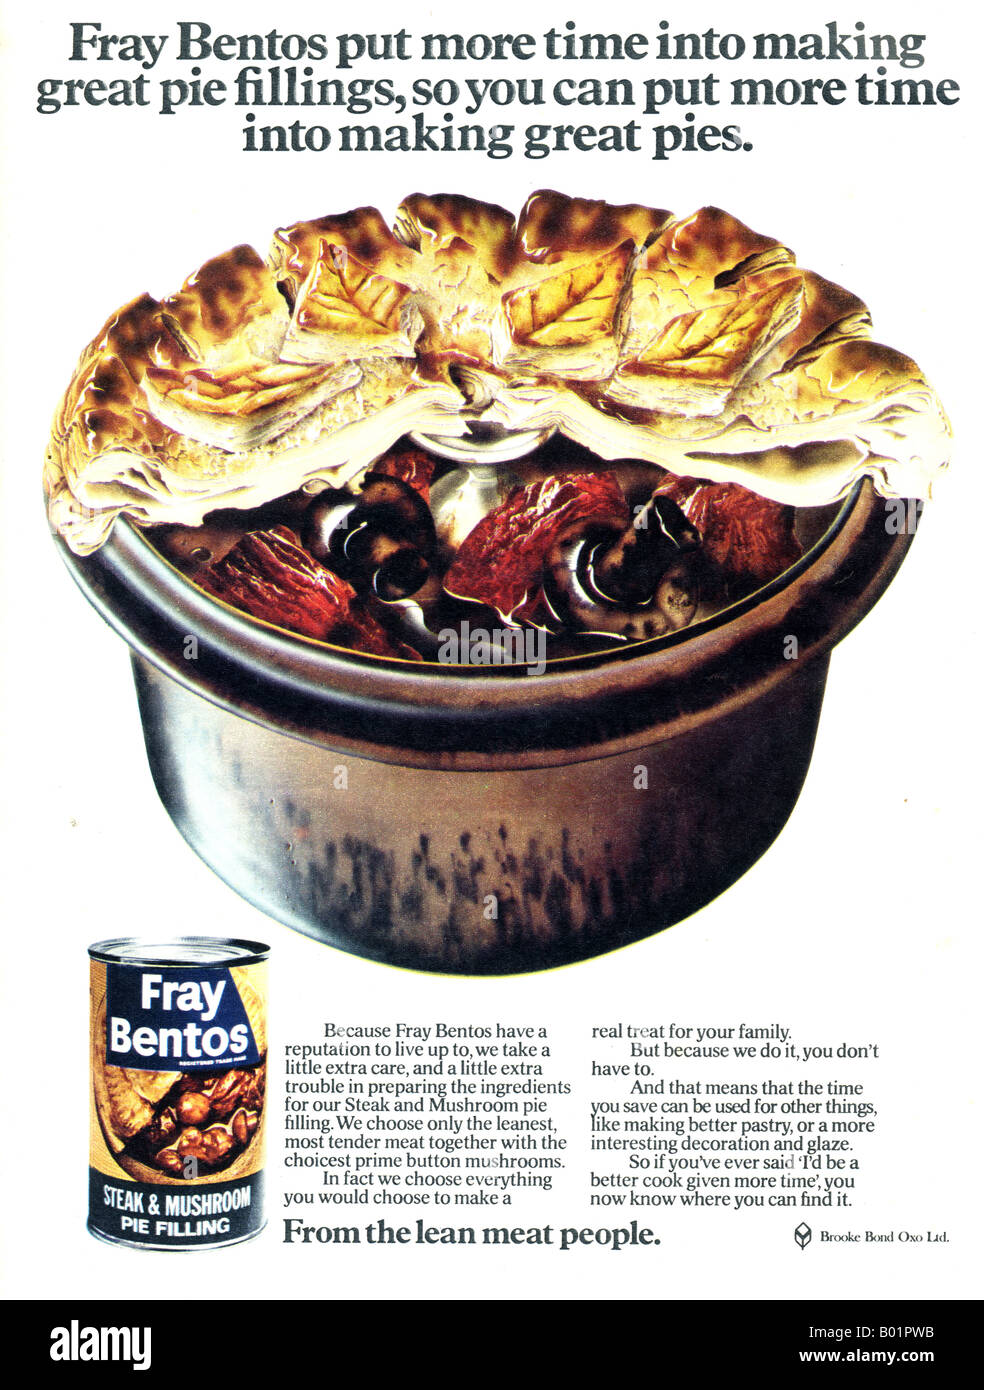 https://c8.alamy.com/comp/B01PWB/1970s-magazine-advertisement-for-fray-bentos-steak-mushroom-pie-filling-B01PWB.jpg